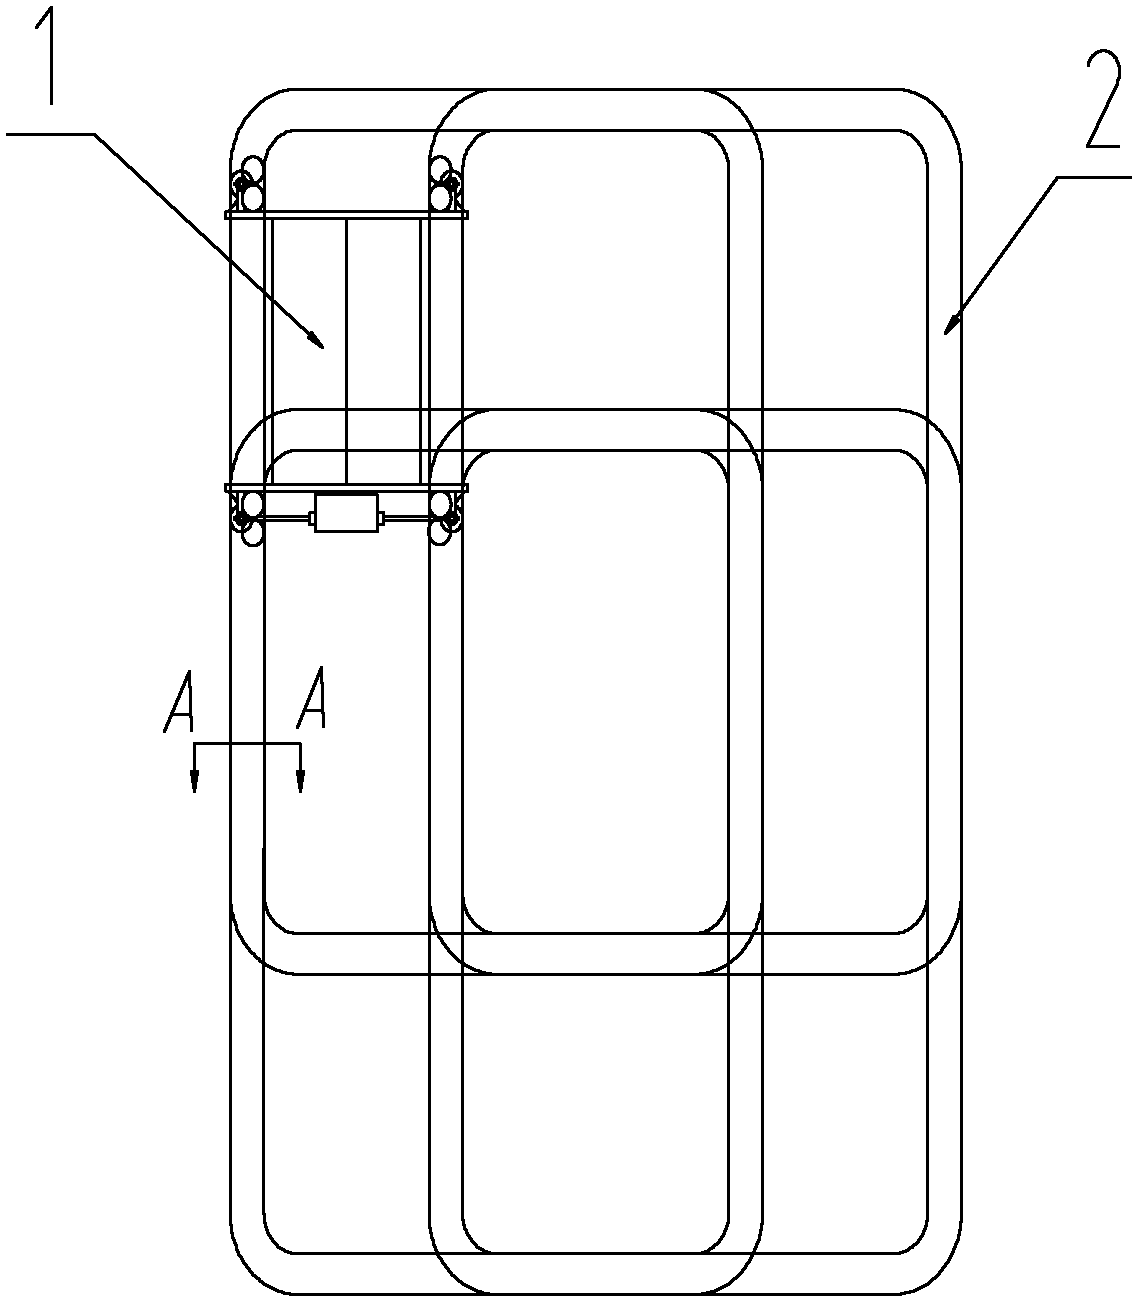 Circulating type elevator system